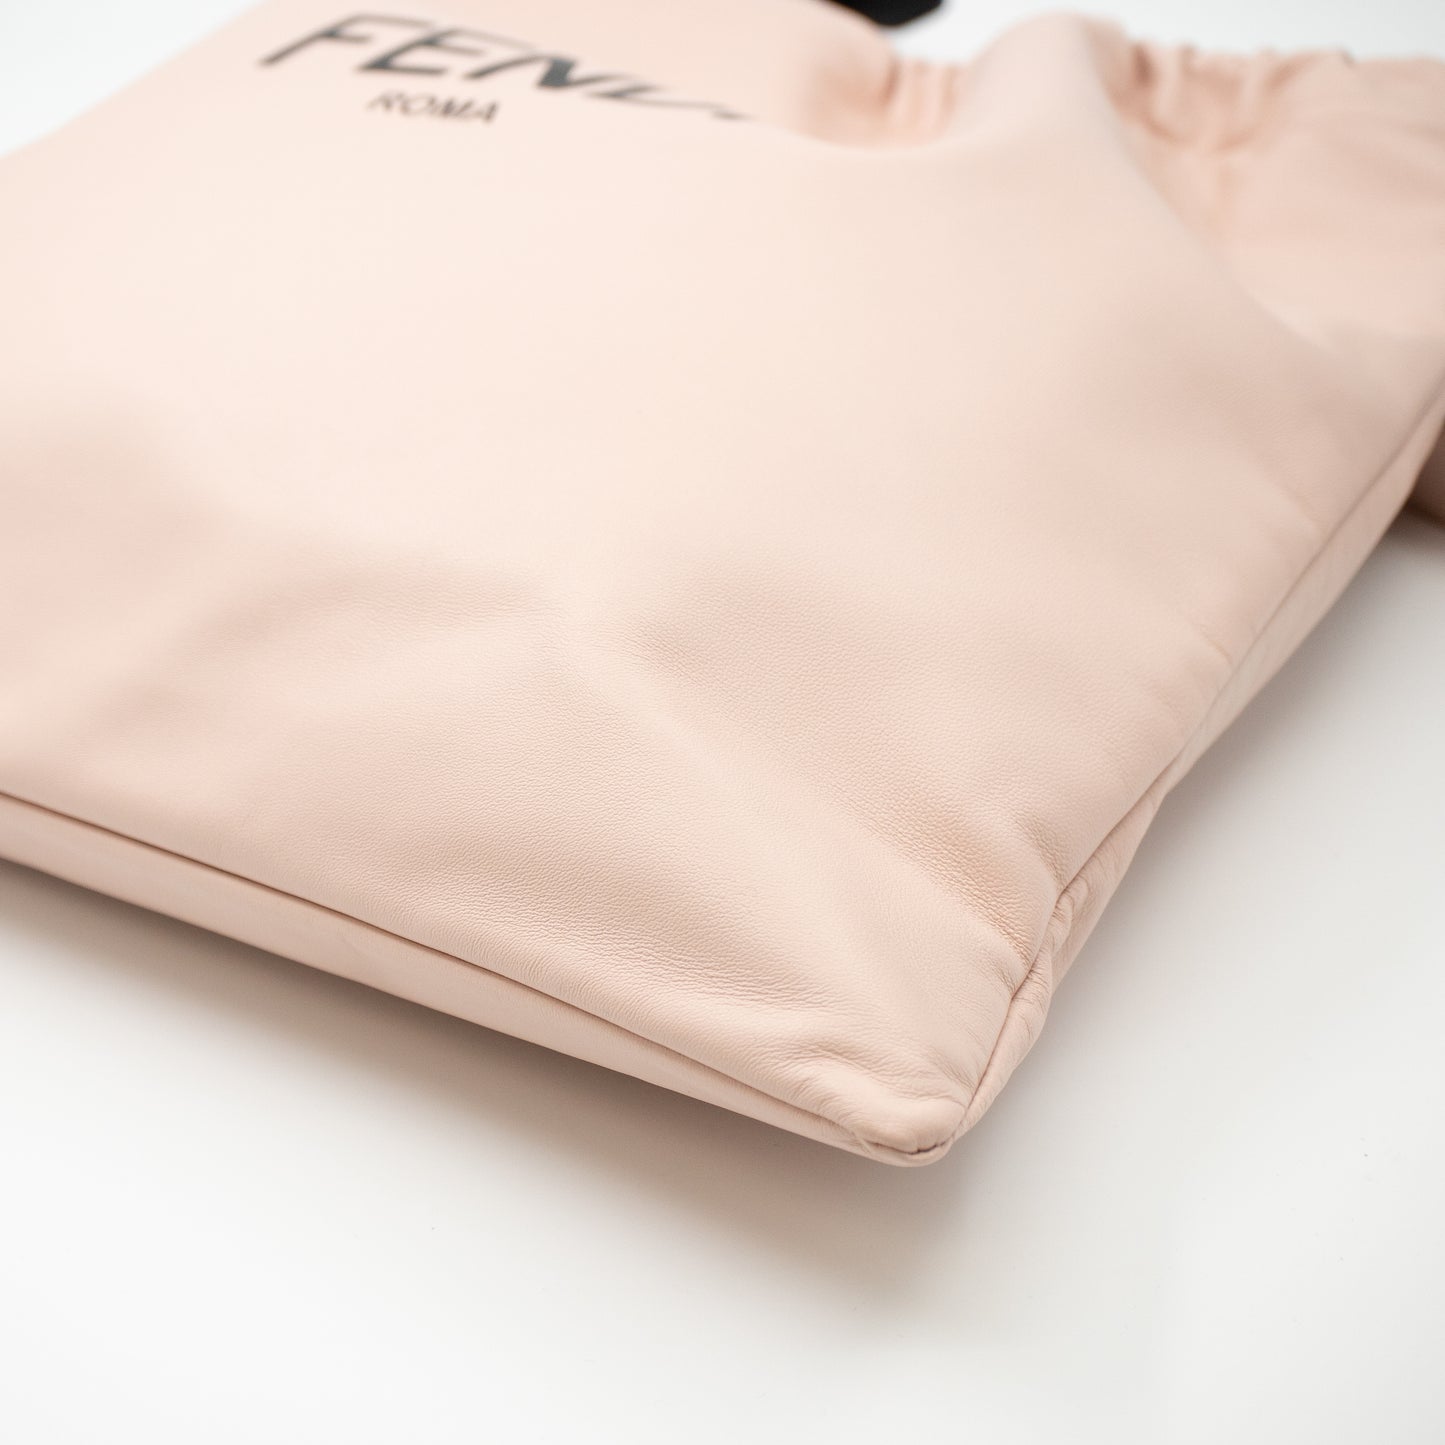 Fendi Pack Pouch Medium Light Pink Leather